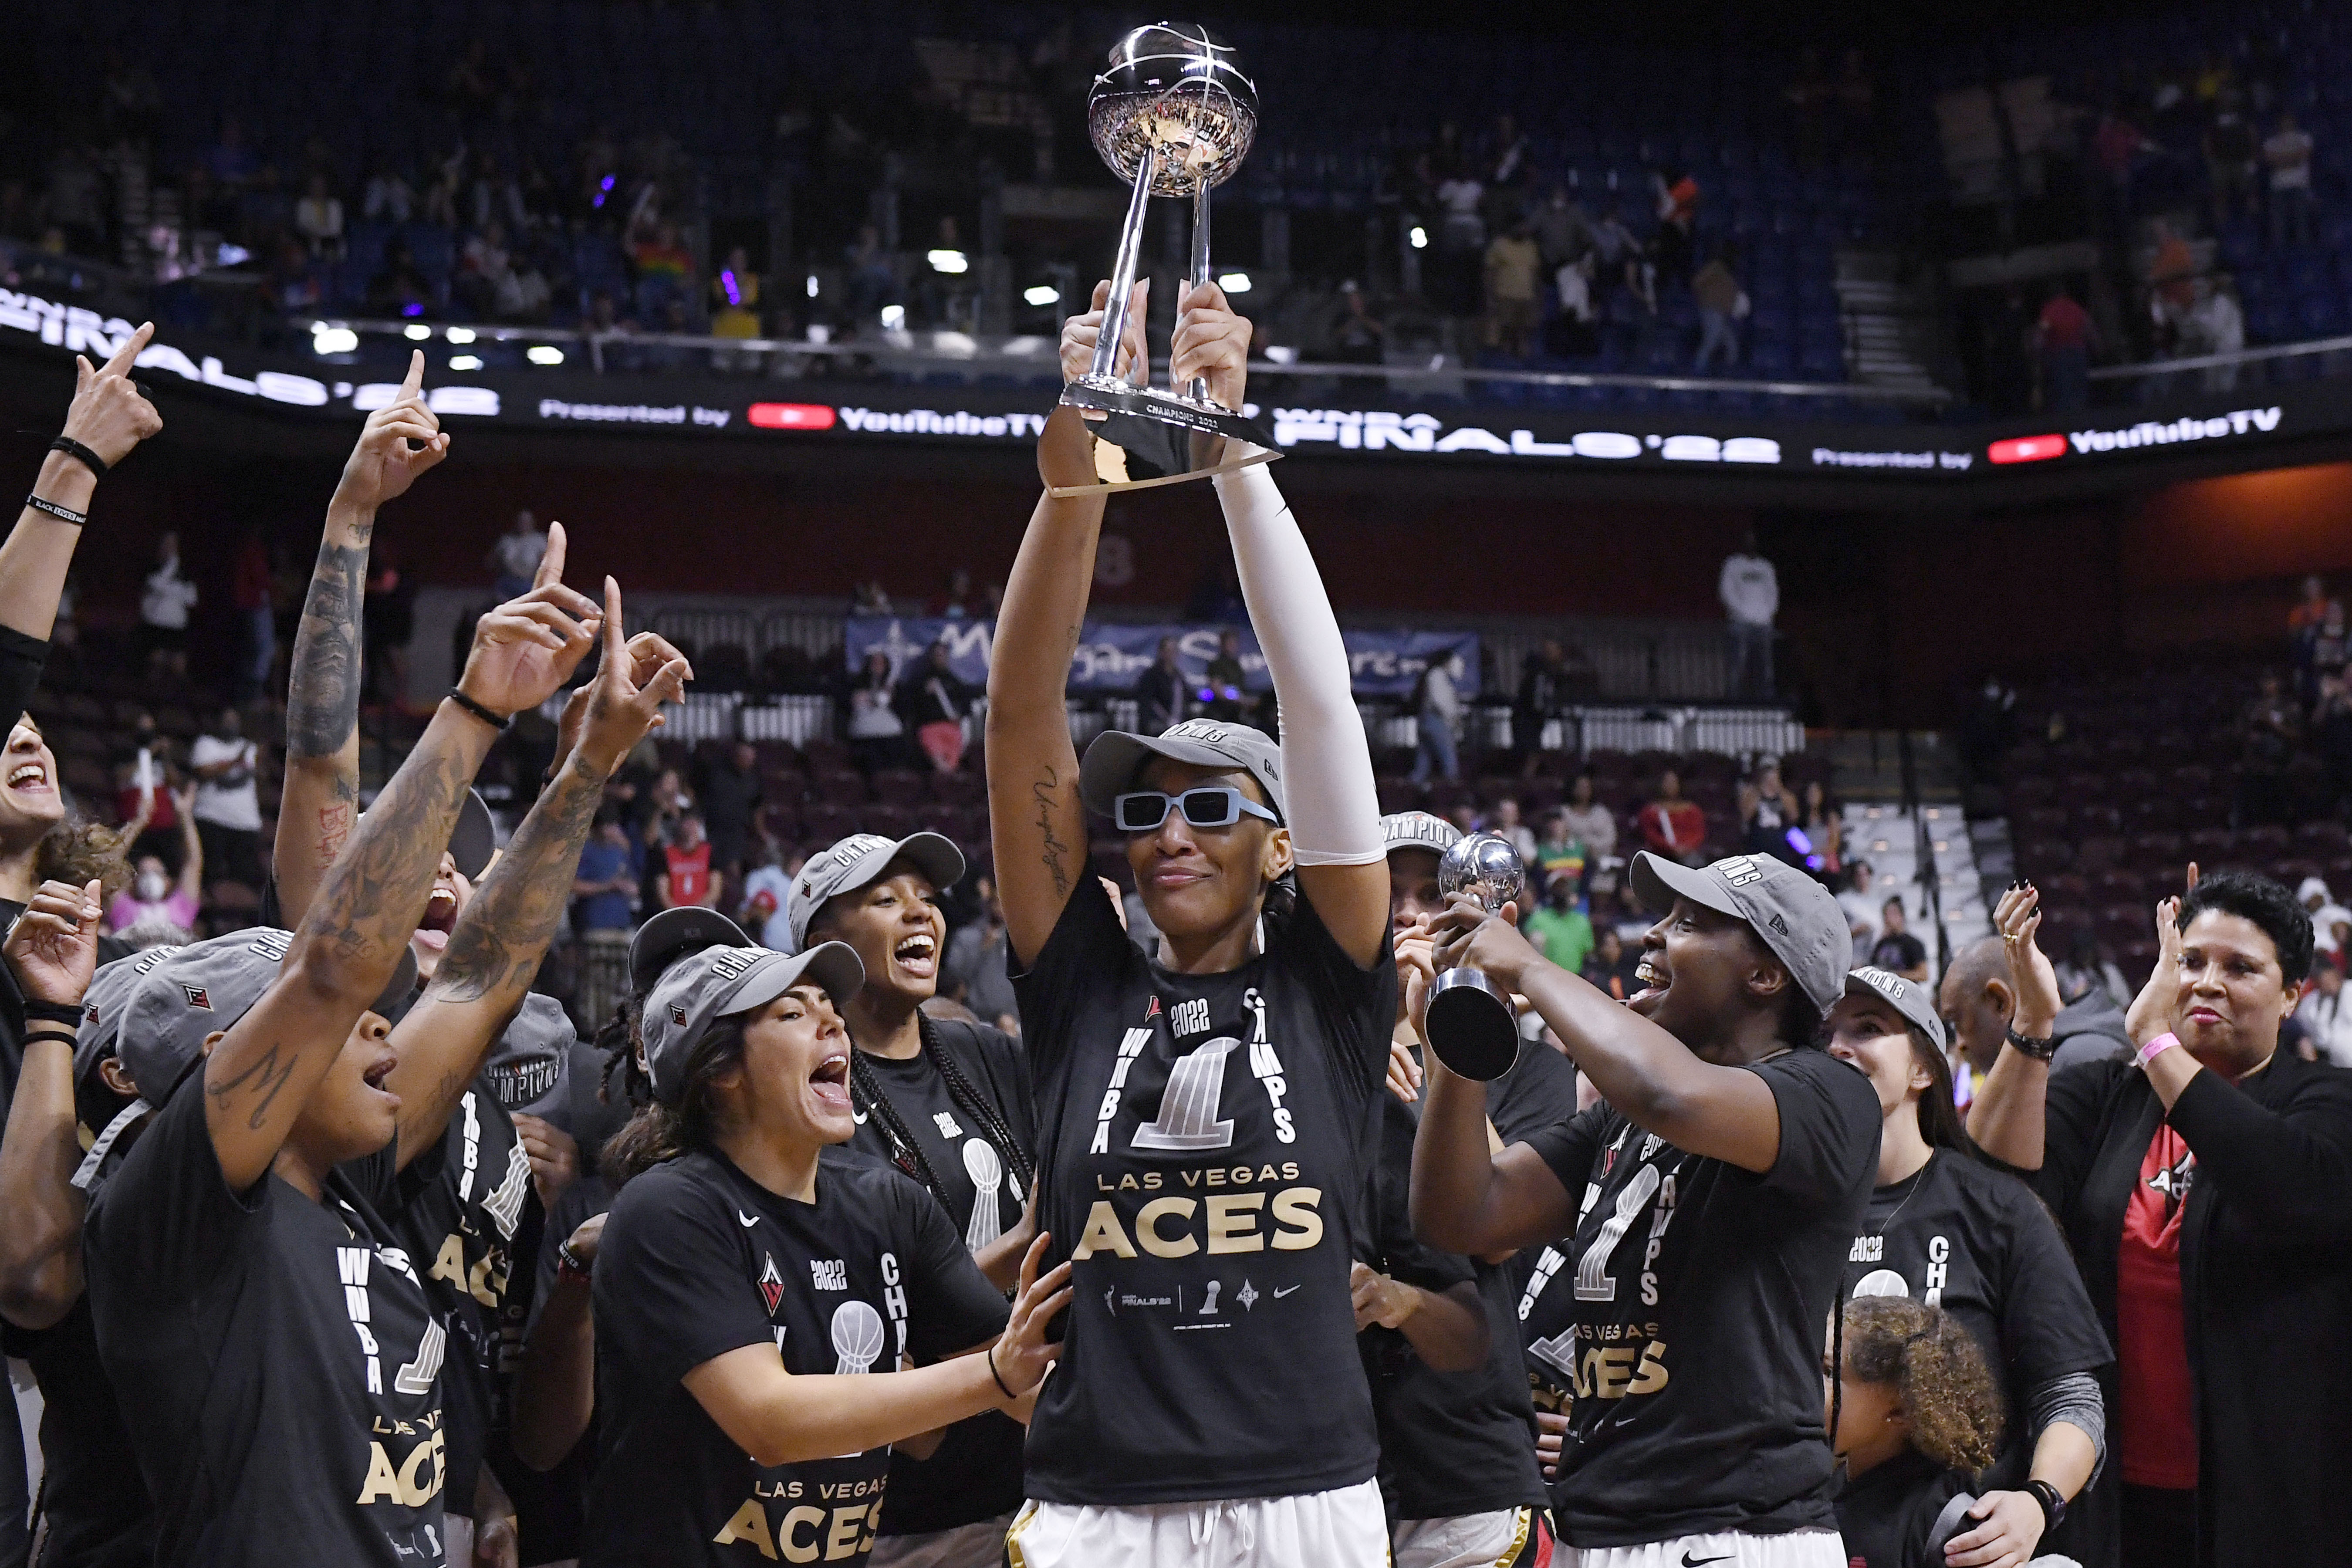 Back 2 Back 2023 WNBA Finals Champions Las Vegas Aces Raises The Stakes  Shirt - teejeep